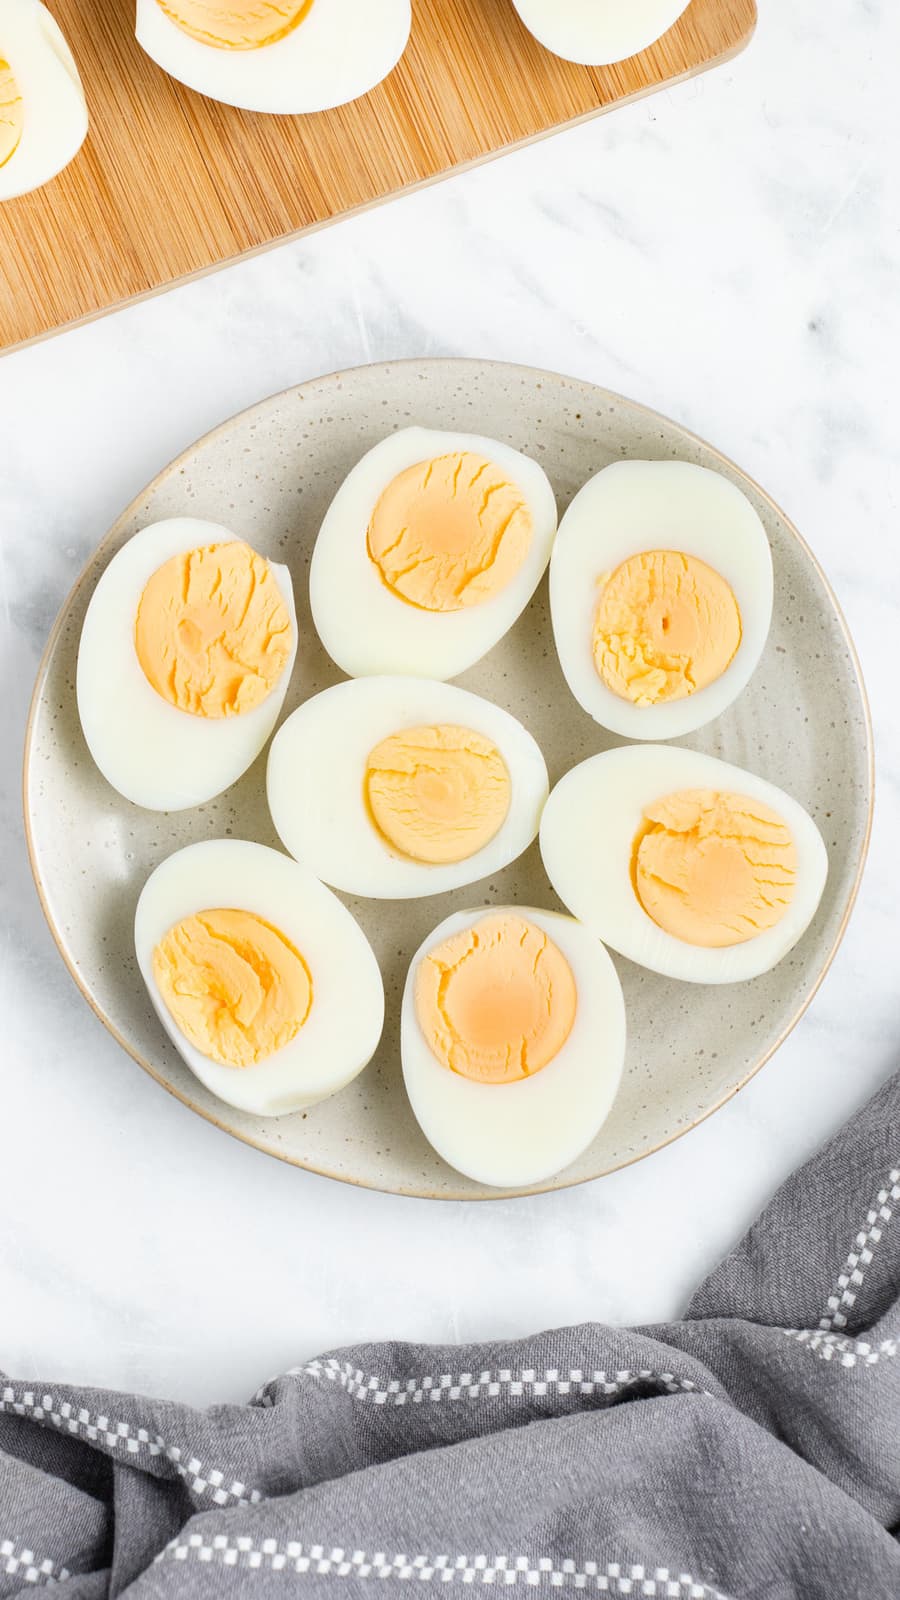 Hard boiled egg halves on plate